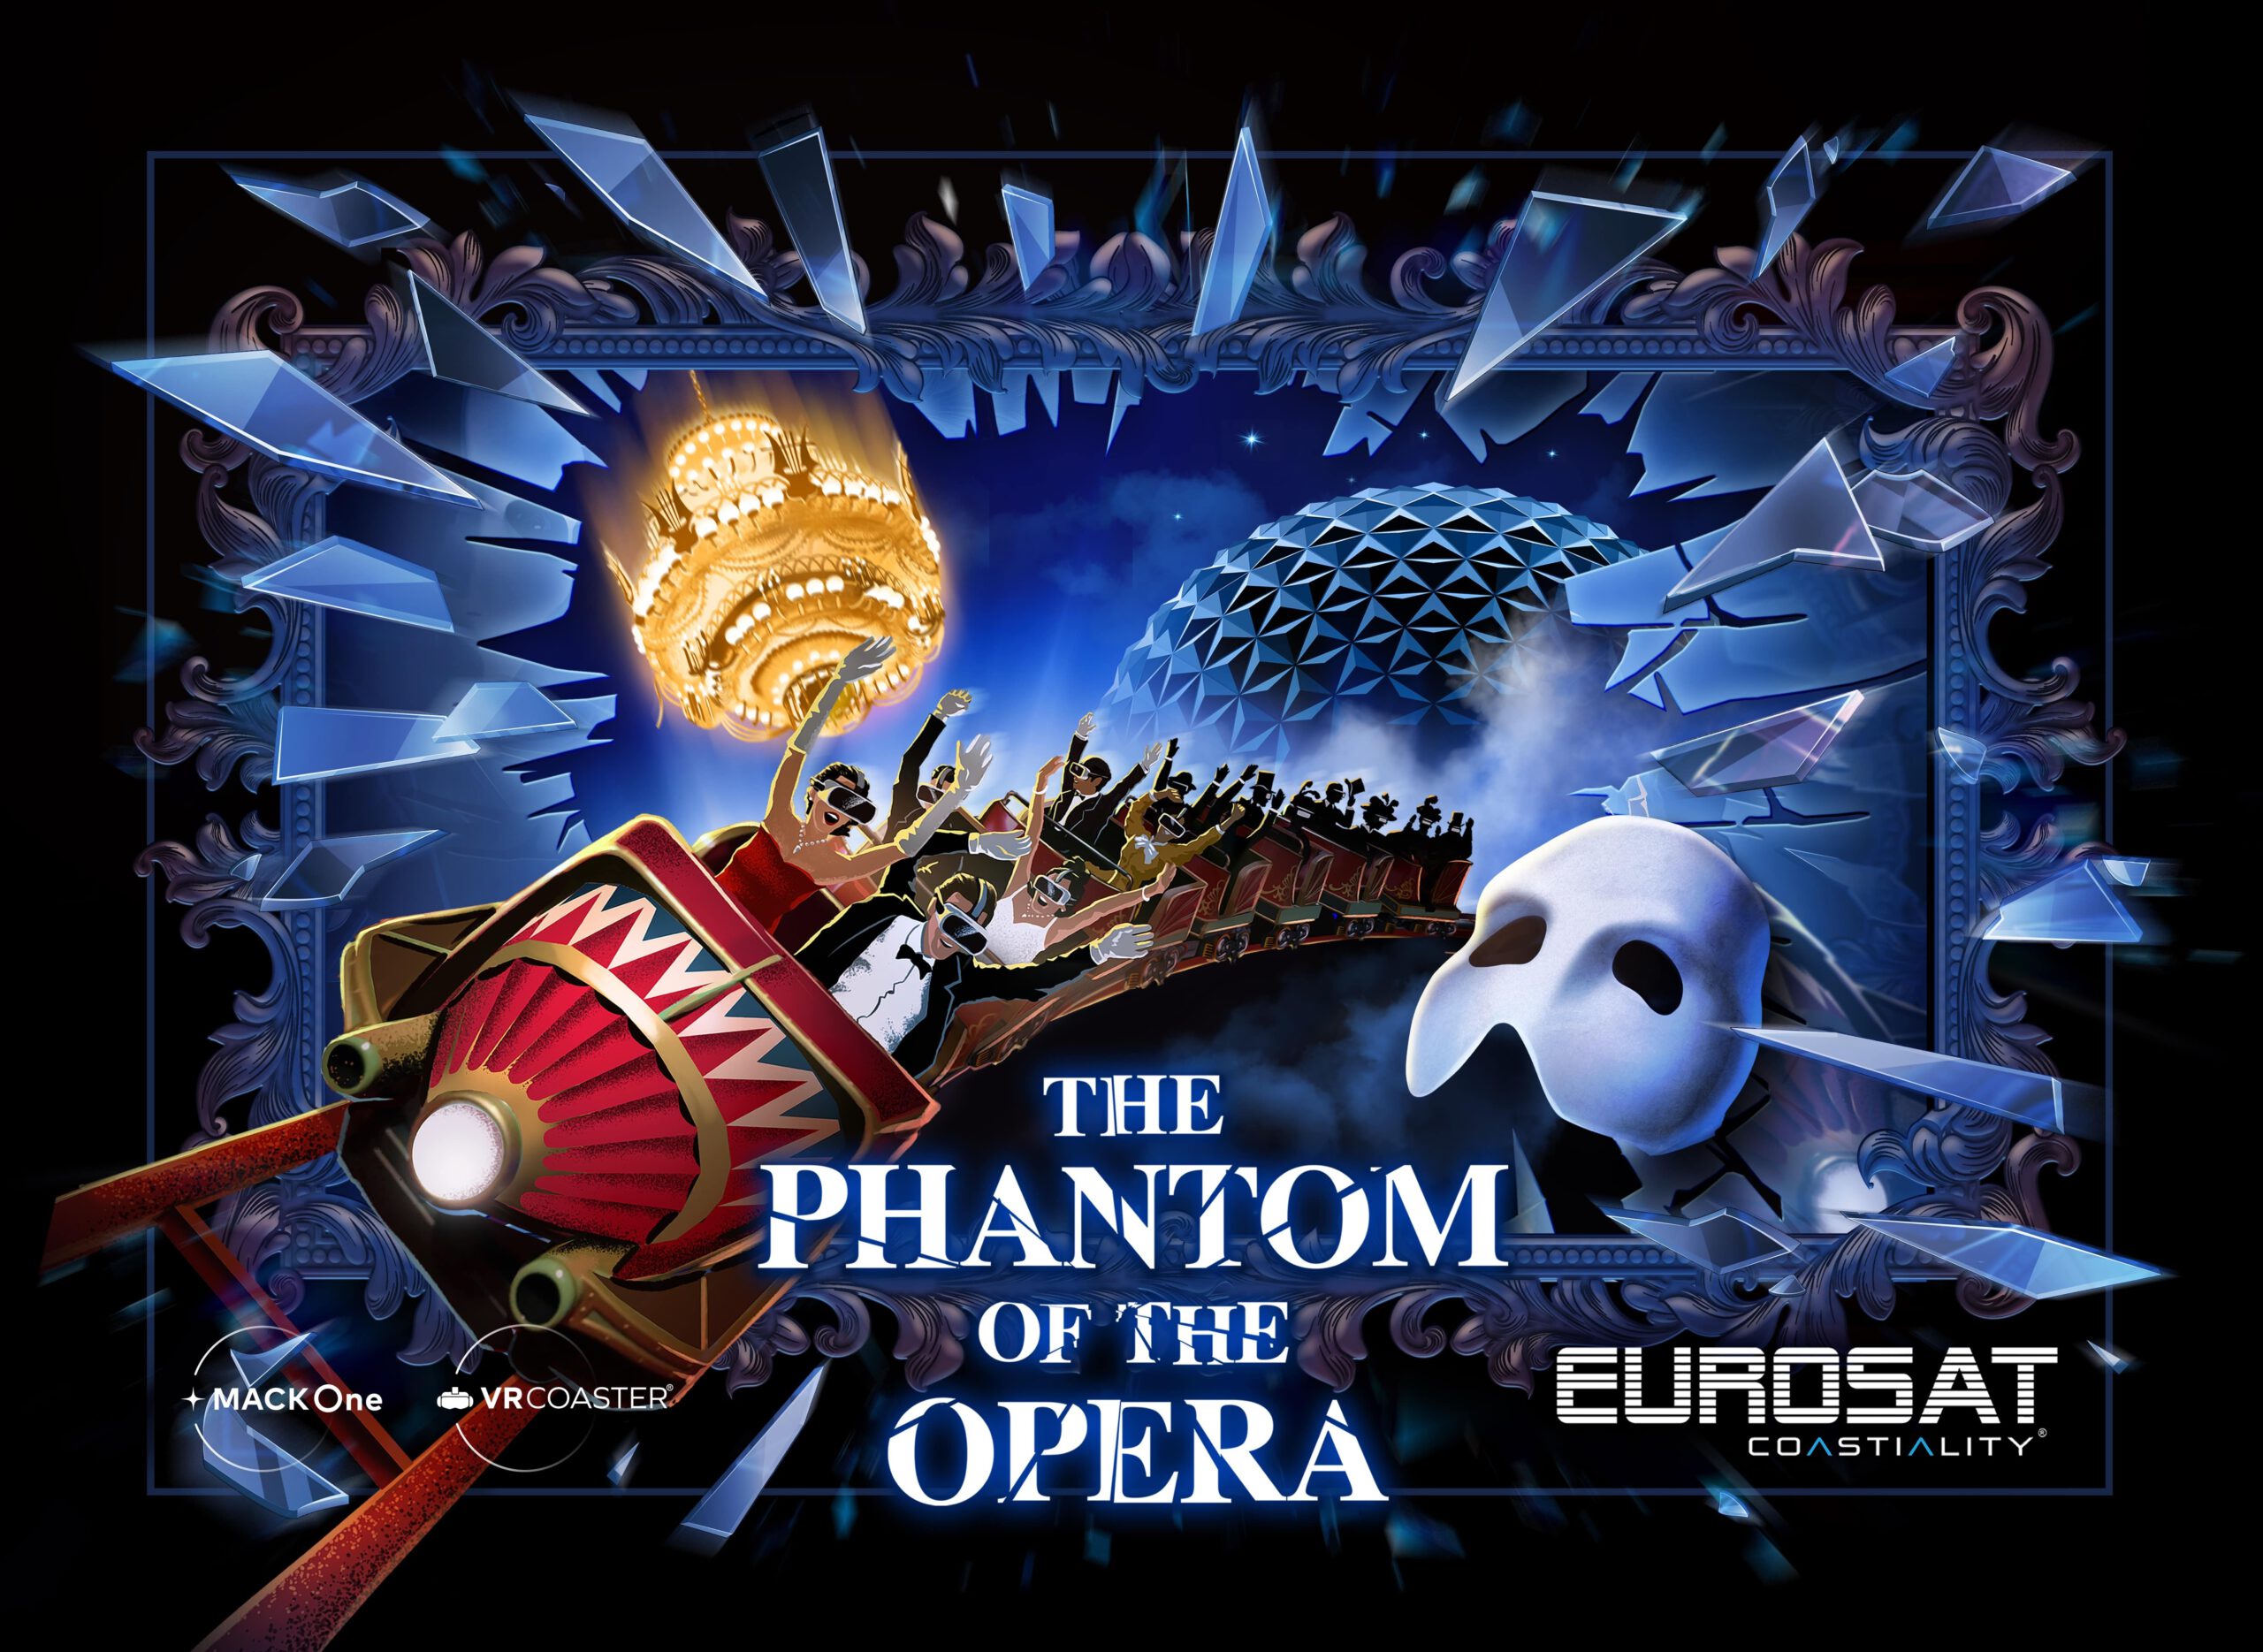 Eurosat Coastiality Phantom der Oper